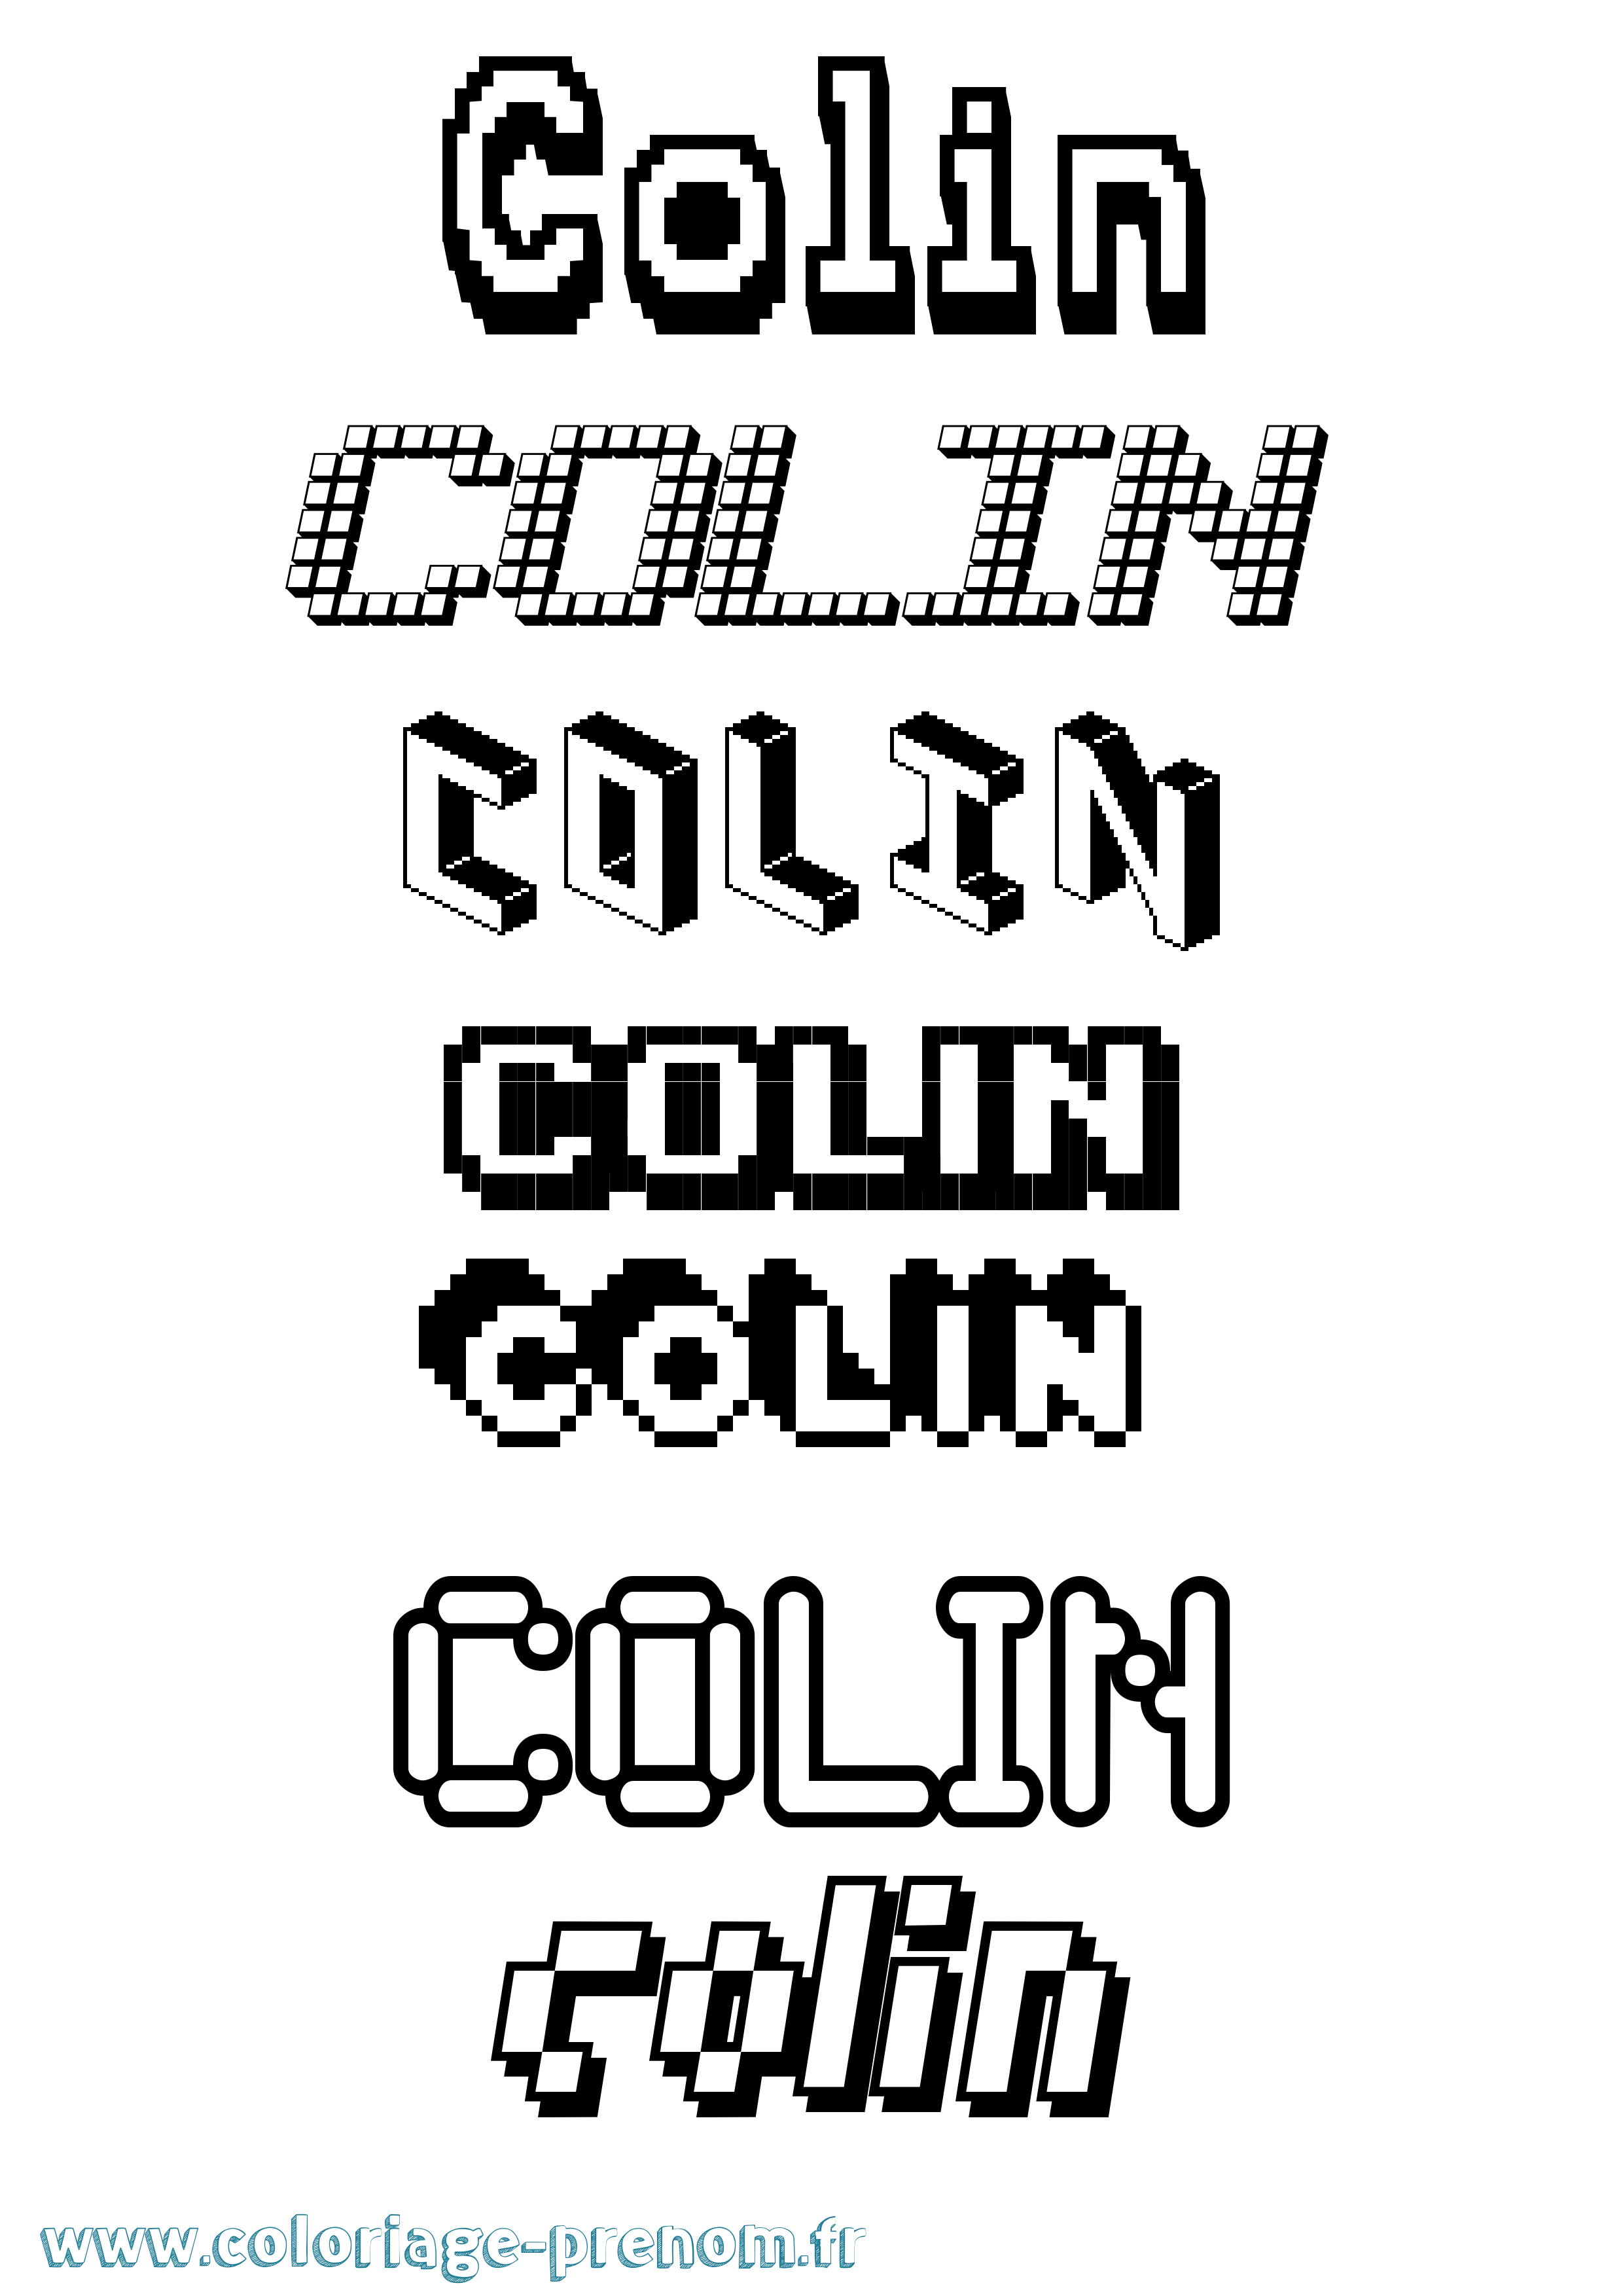 Coloriage prénom Colin Pixel